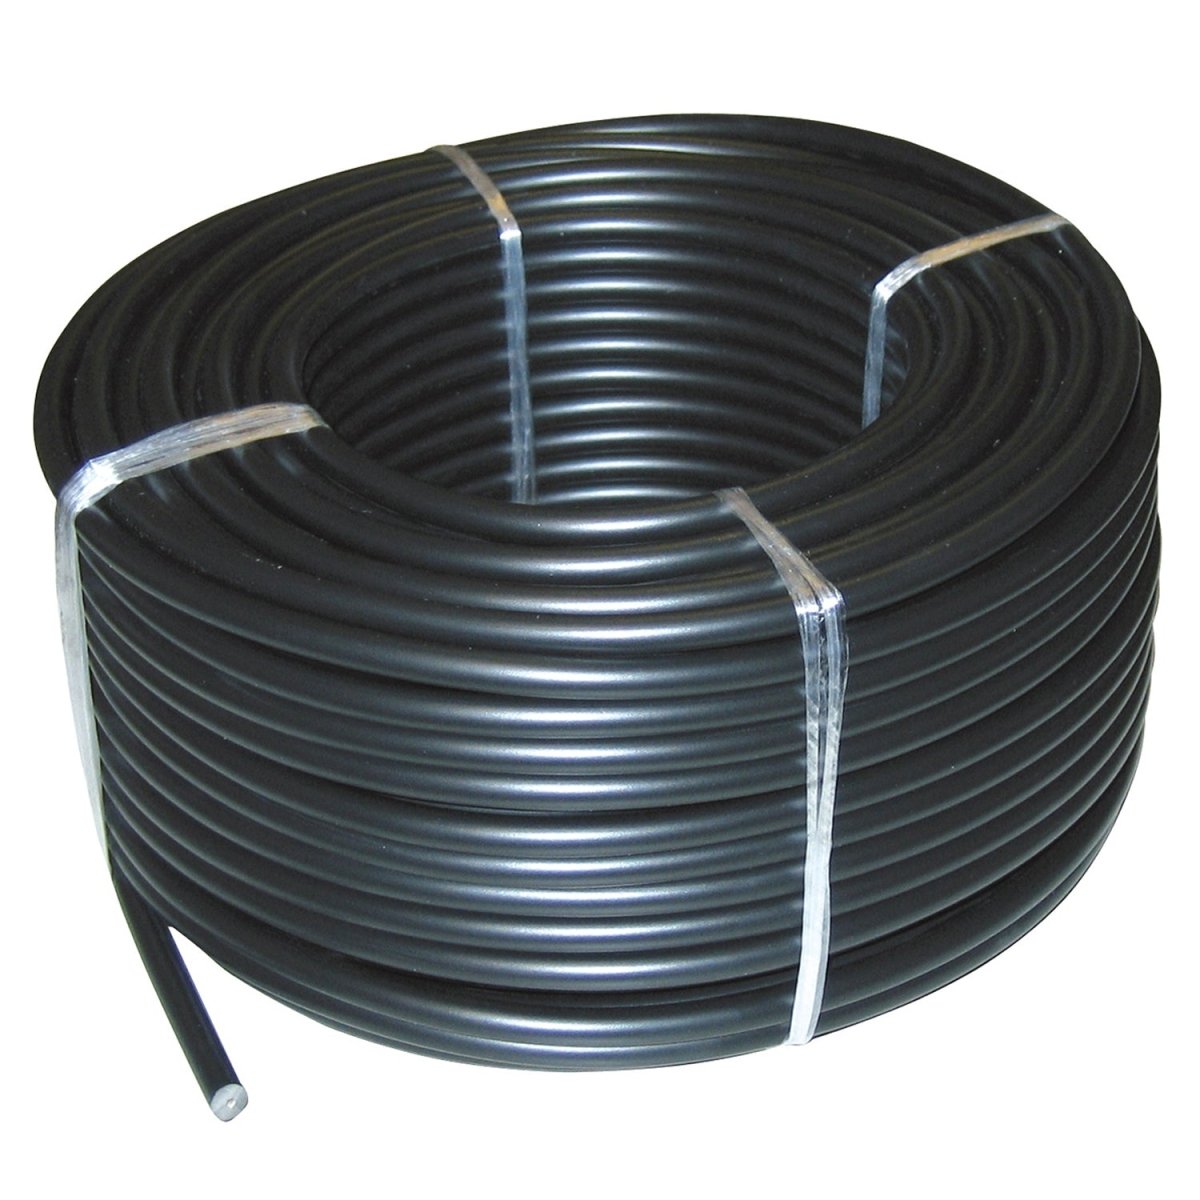 Corral High Voltage Underground Cable - Black - 50M